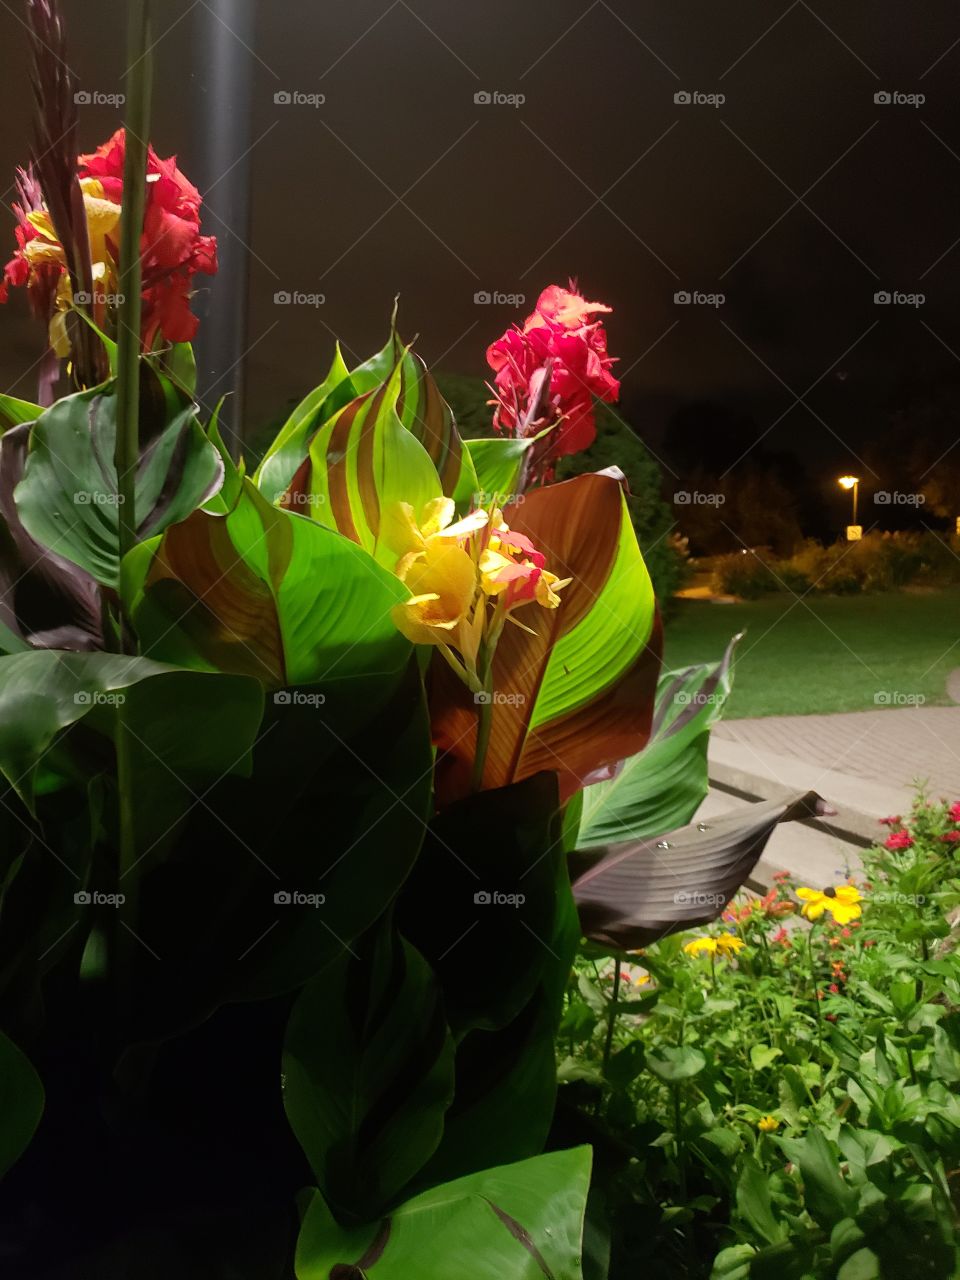 Flowers at night